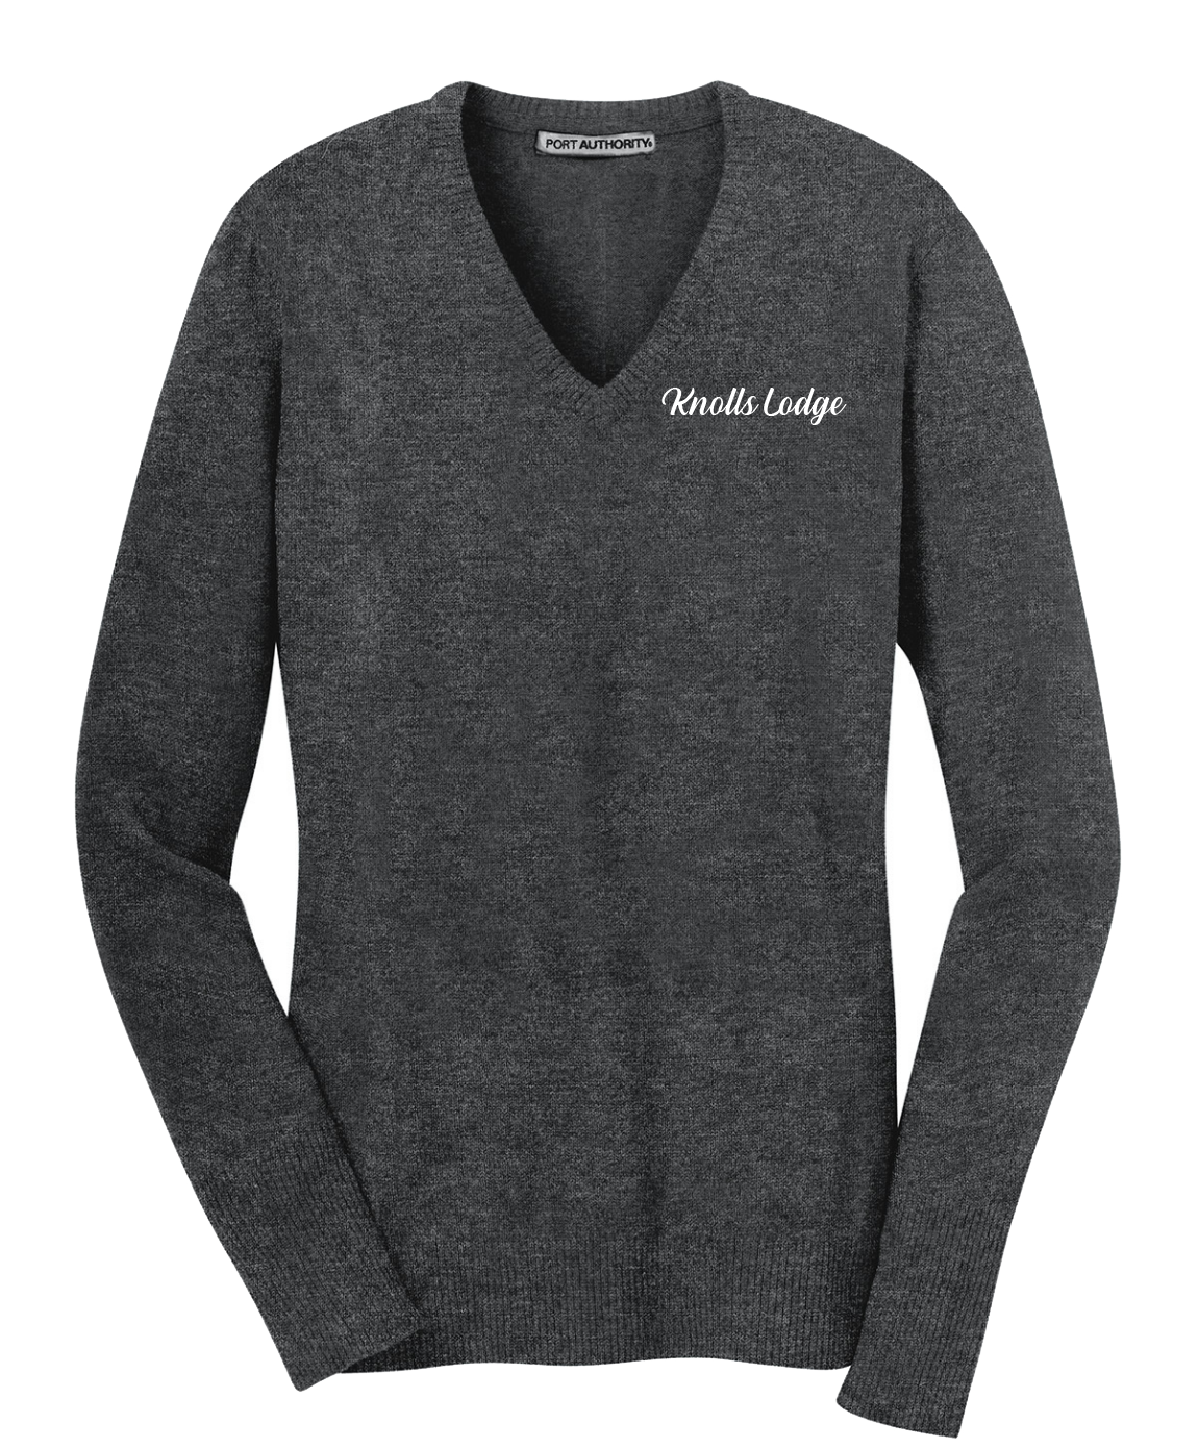 Knolls Lodge - Port Authority® Ladies V-Neck Sweater